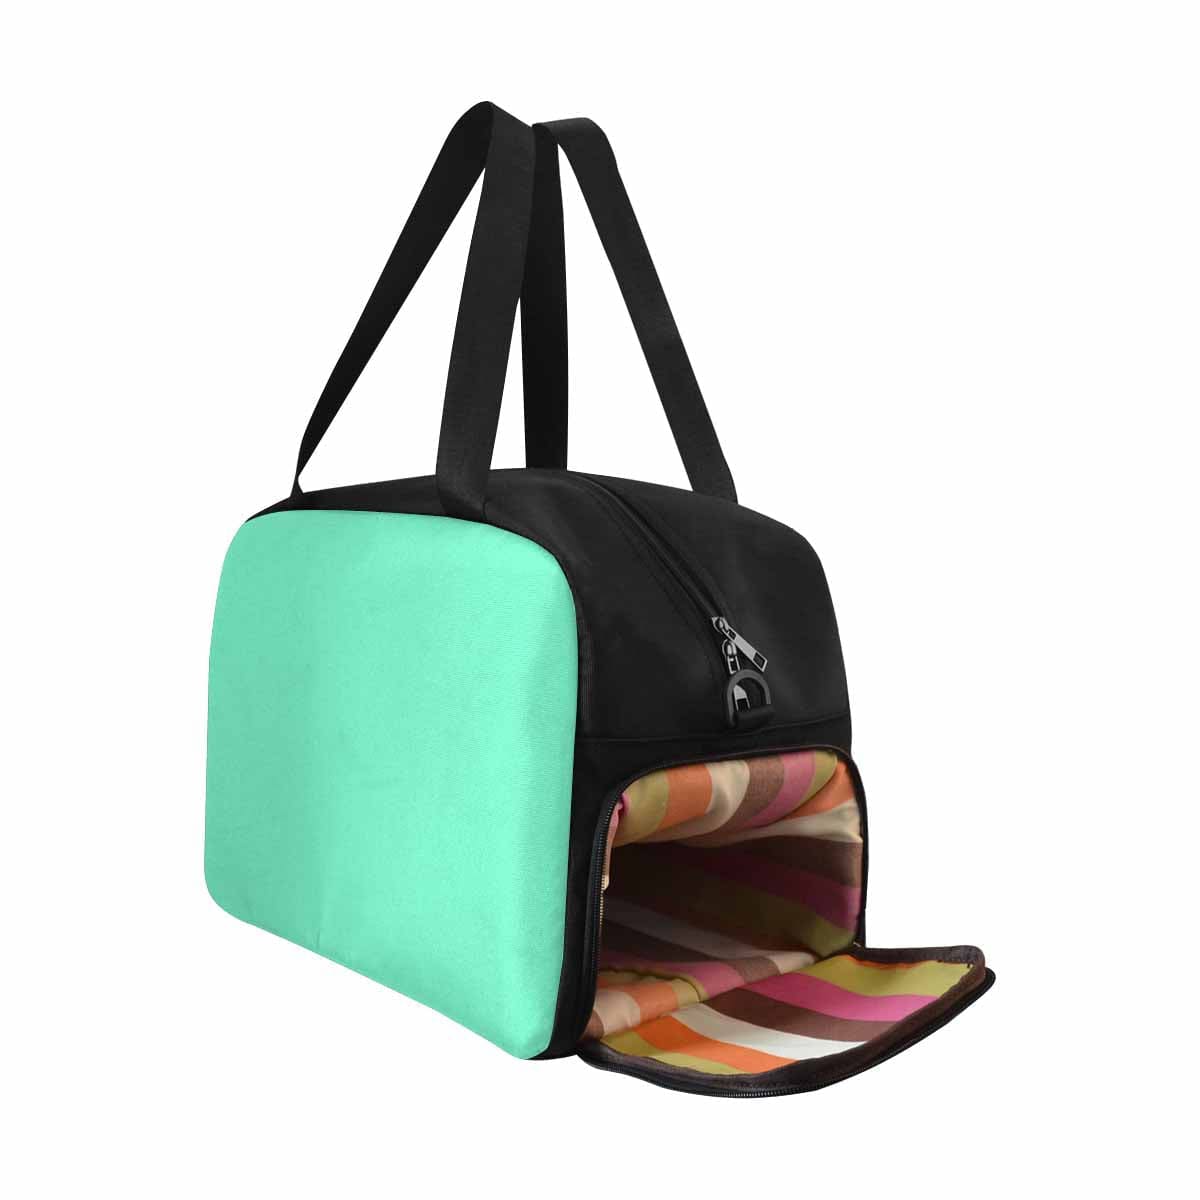 Aquamarine Green Tote And Crossbody Travel Bag - Bags | Travel Bags | Crossbody